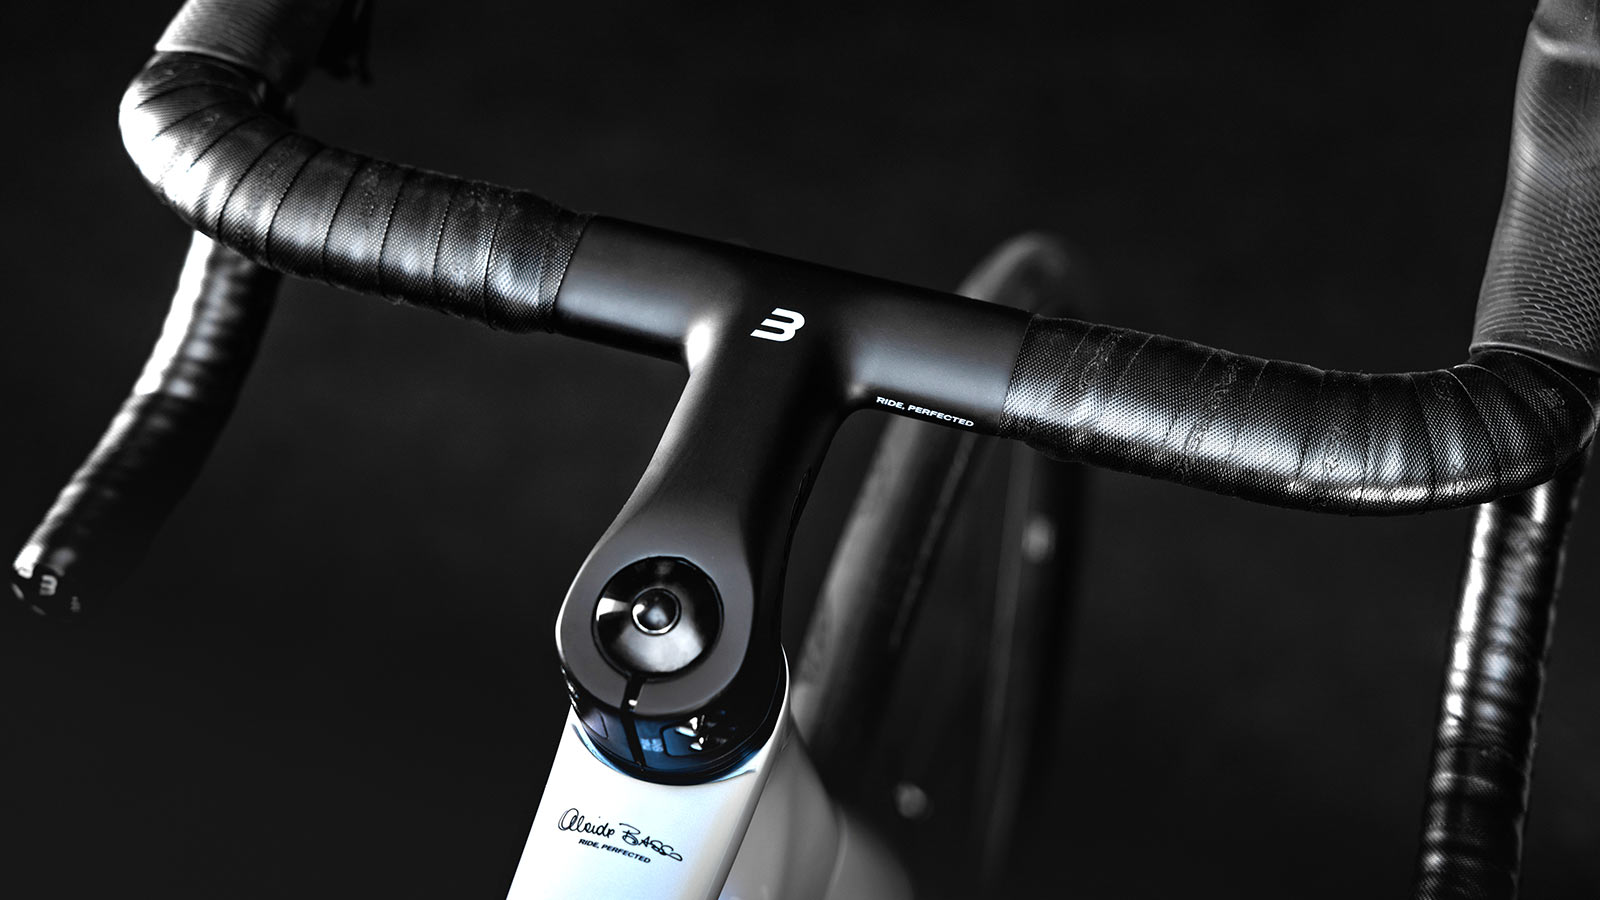 2022 new Basso Diamante lightweight modern classic Italian carbon road bike, Levita cockpit